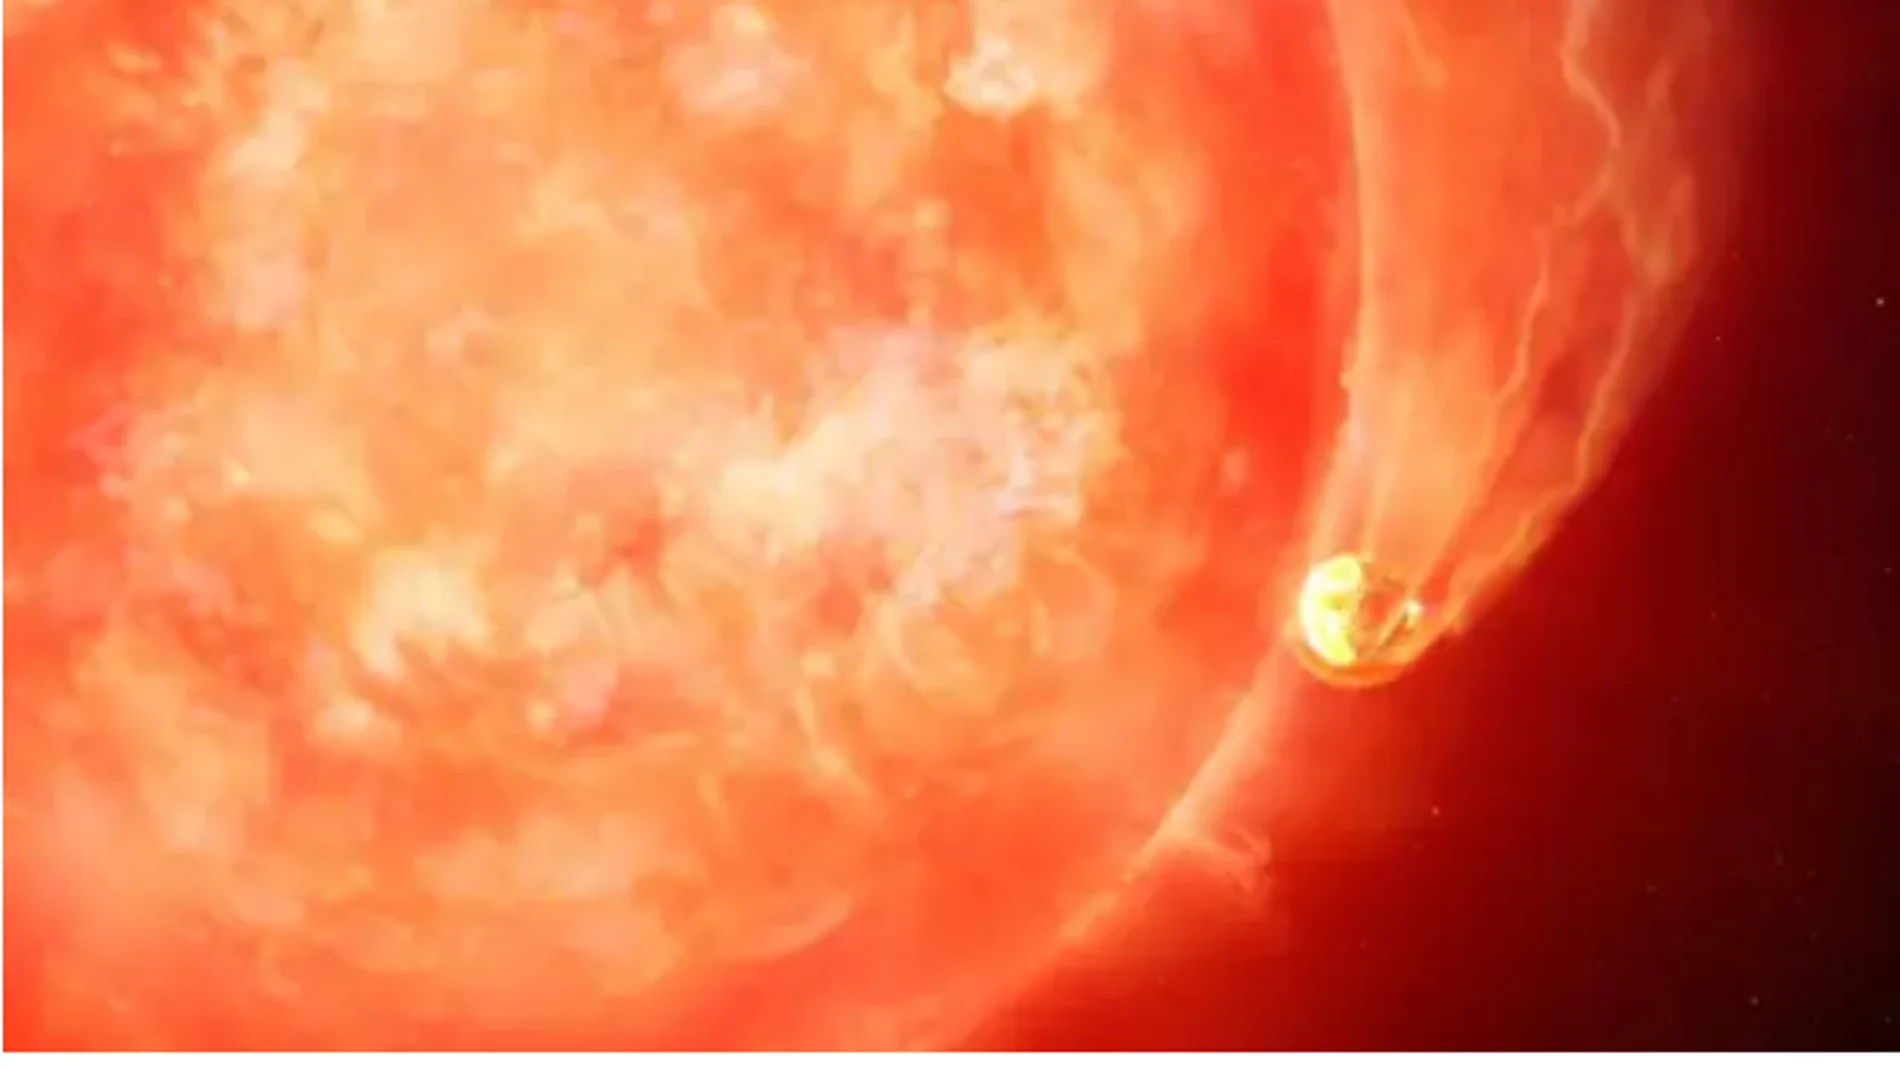 Imagen representativa de una estrella engullendo un planeta